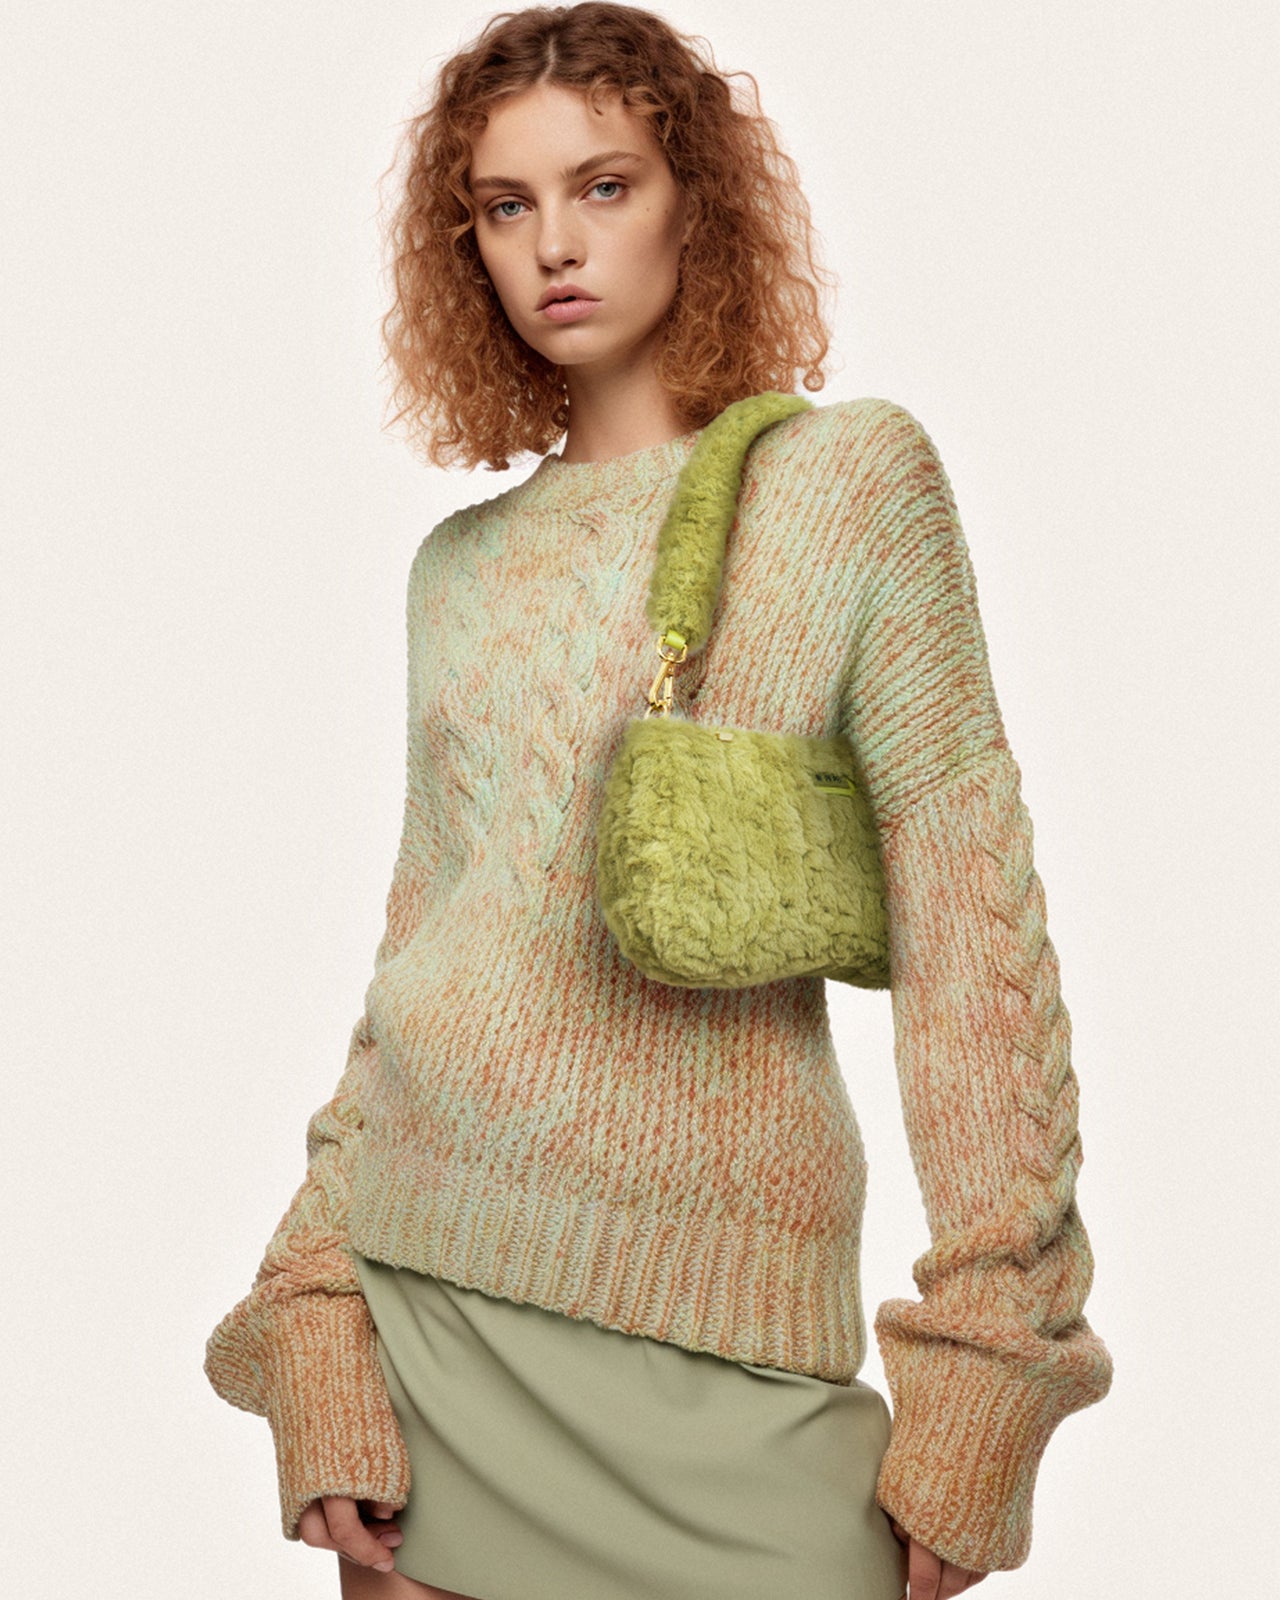 Eva Shoulder Handbag - Blue Denim Weave Online Shopping - JW Pei